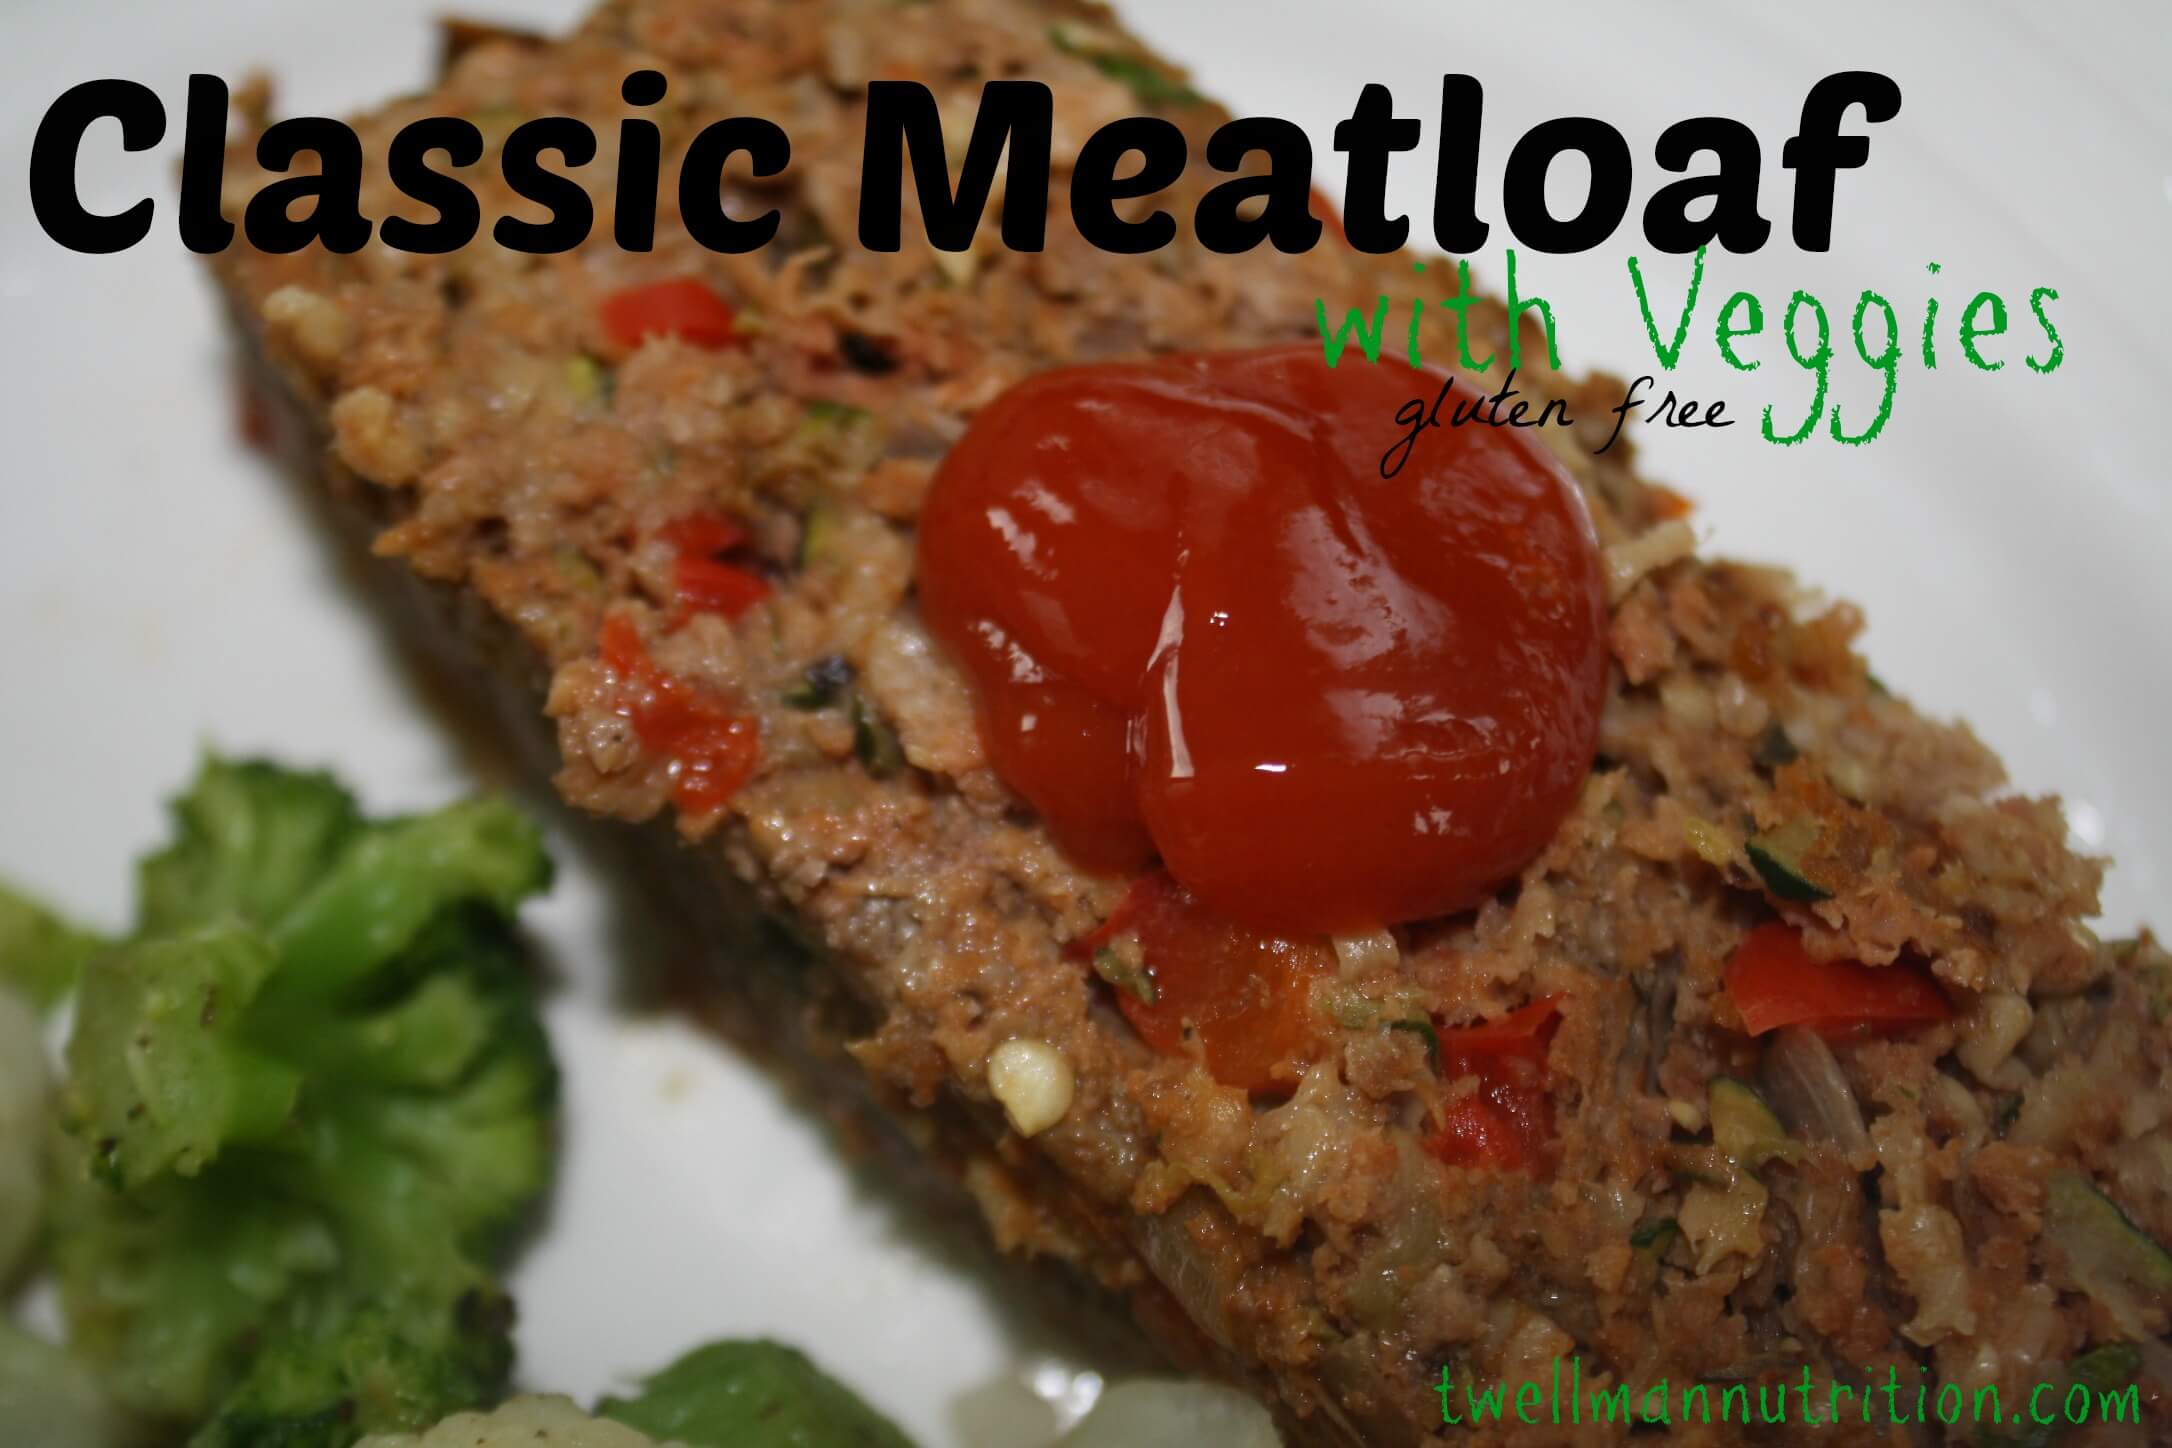 Classic Meatloaf wit Veggies